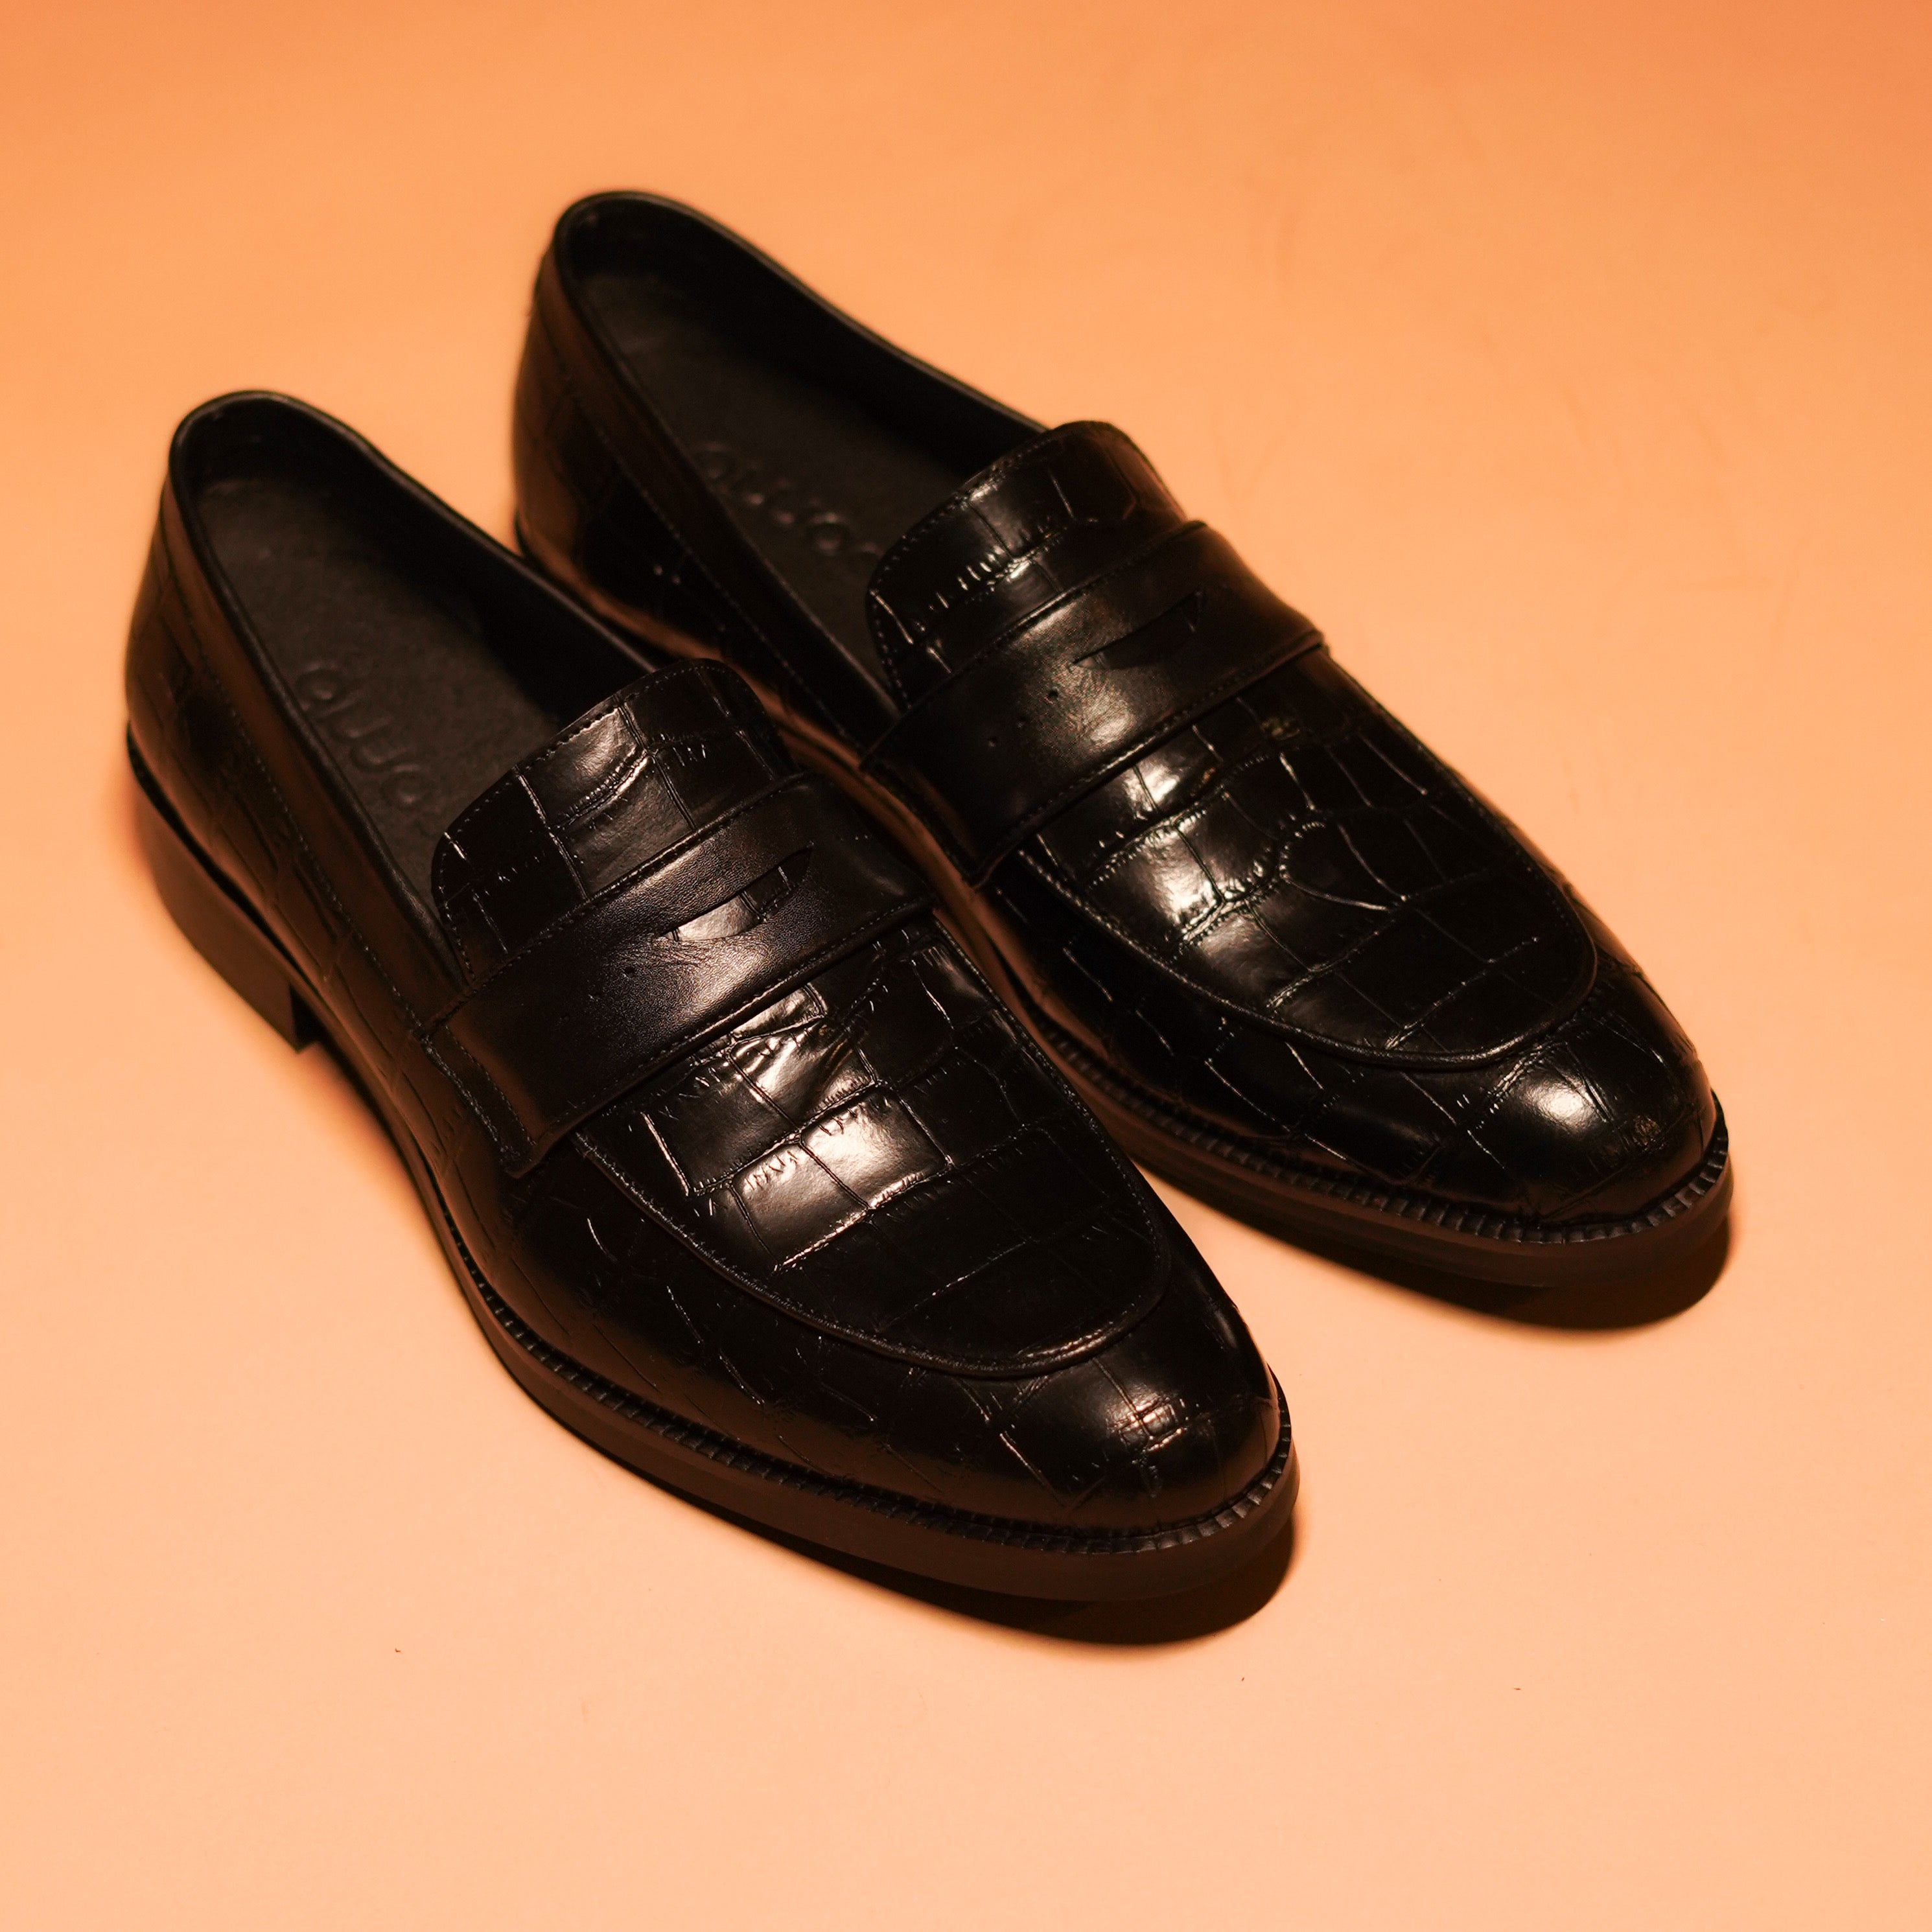 Elegant silhouette of Motivo Crocco penny loafer showcasing premium comfort and sleek design.